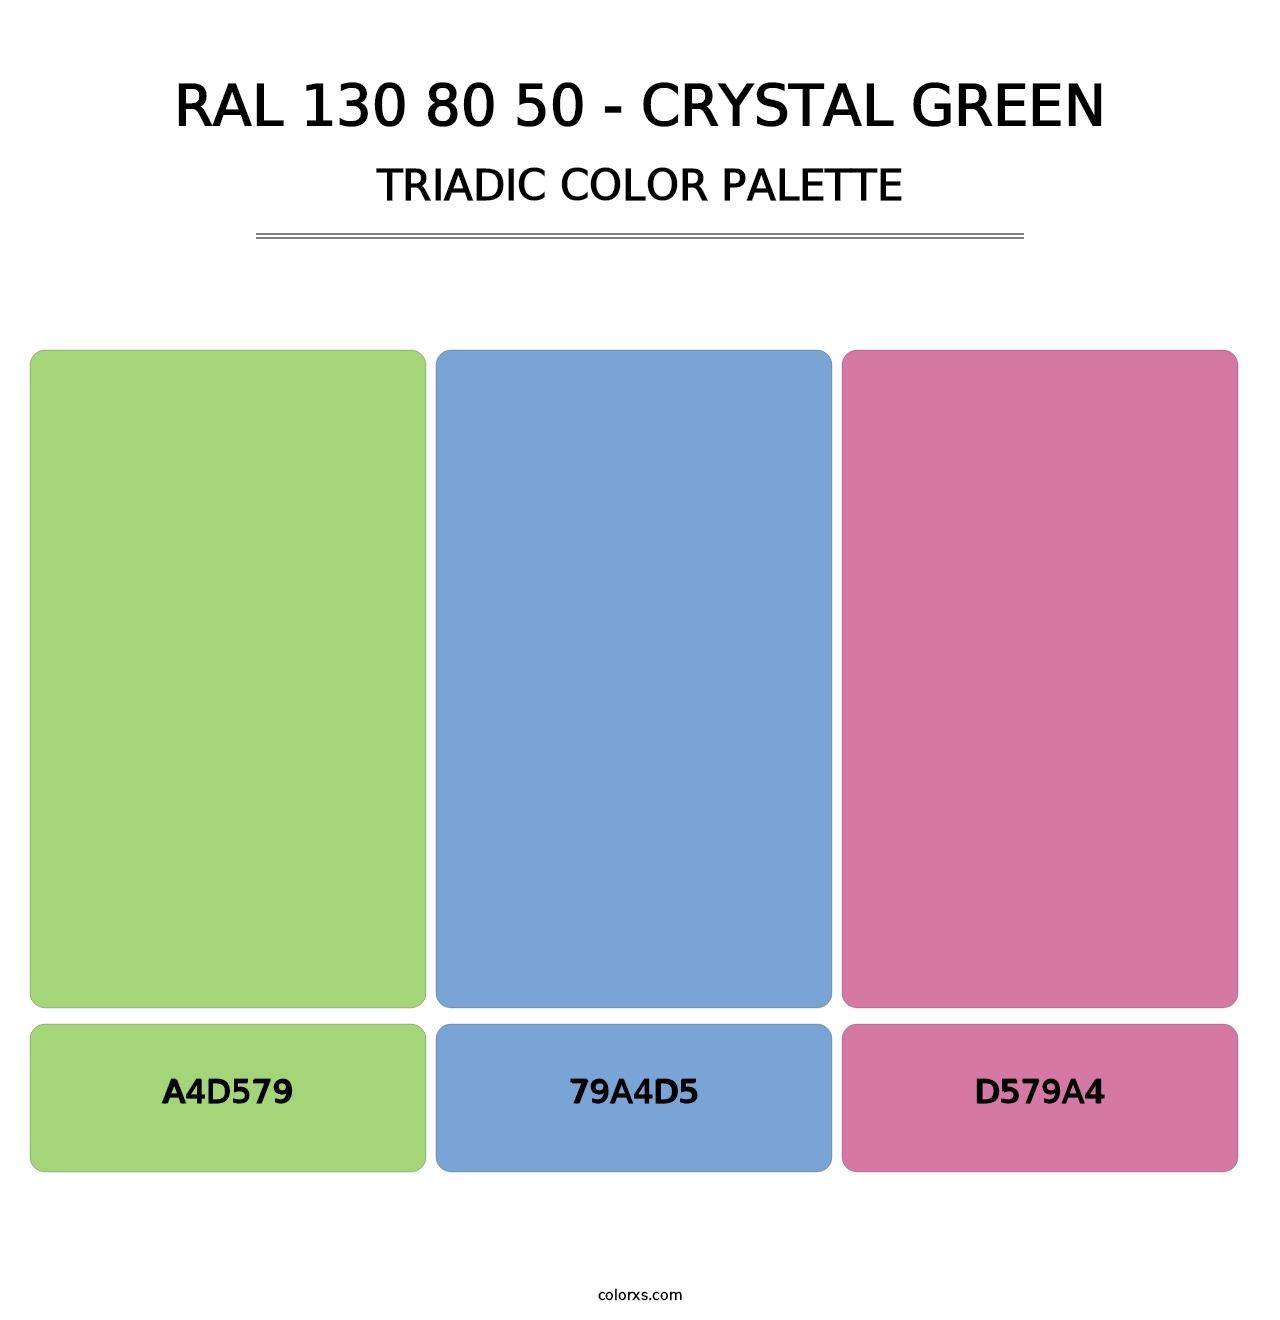 RAL 130 80 50 - Crystal Green - Triadic Color Palette